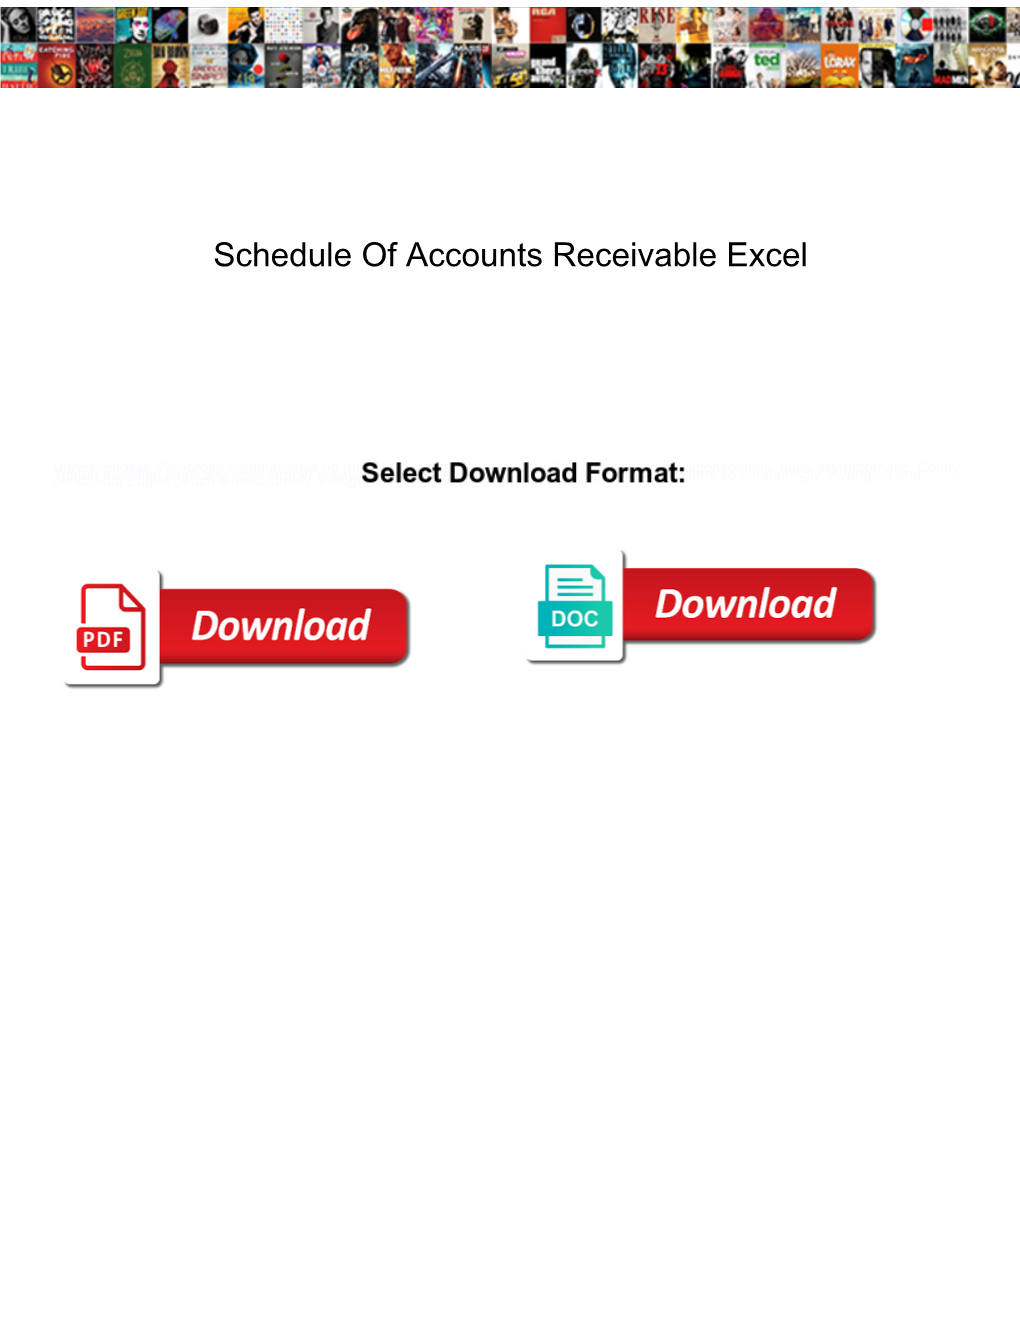 Schedule of Accounts Receivable Excel